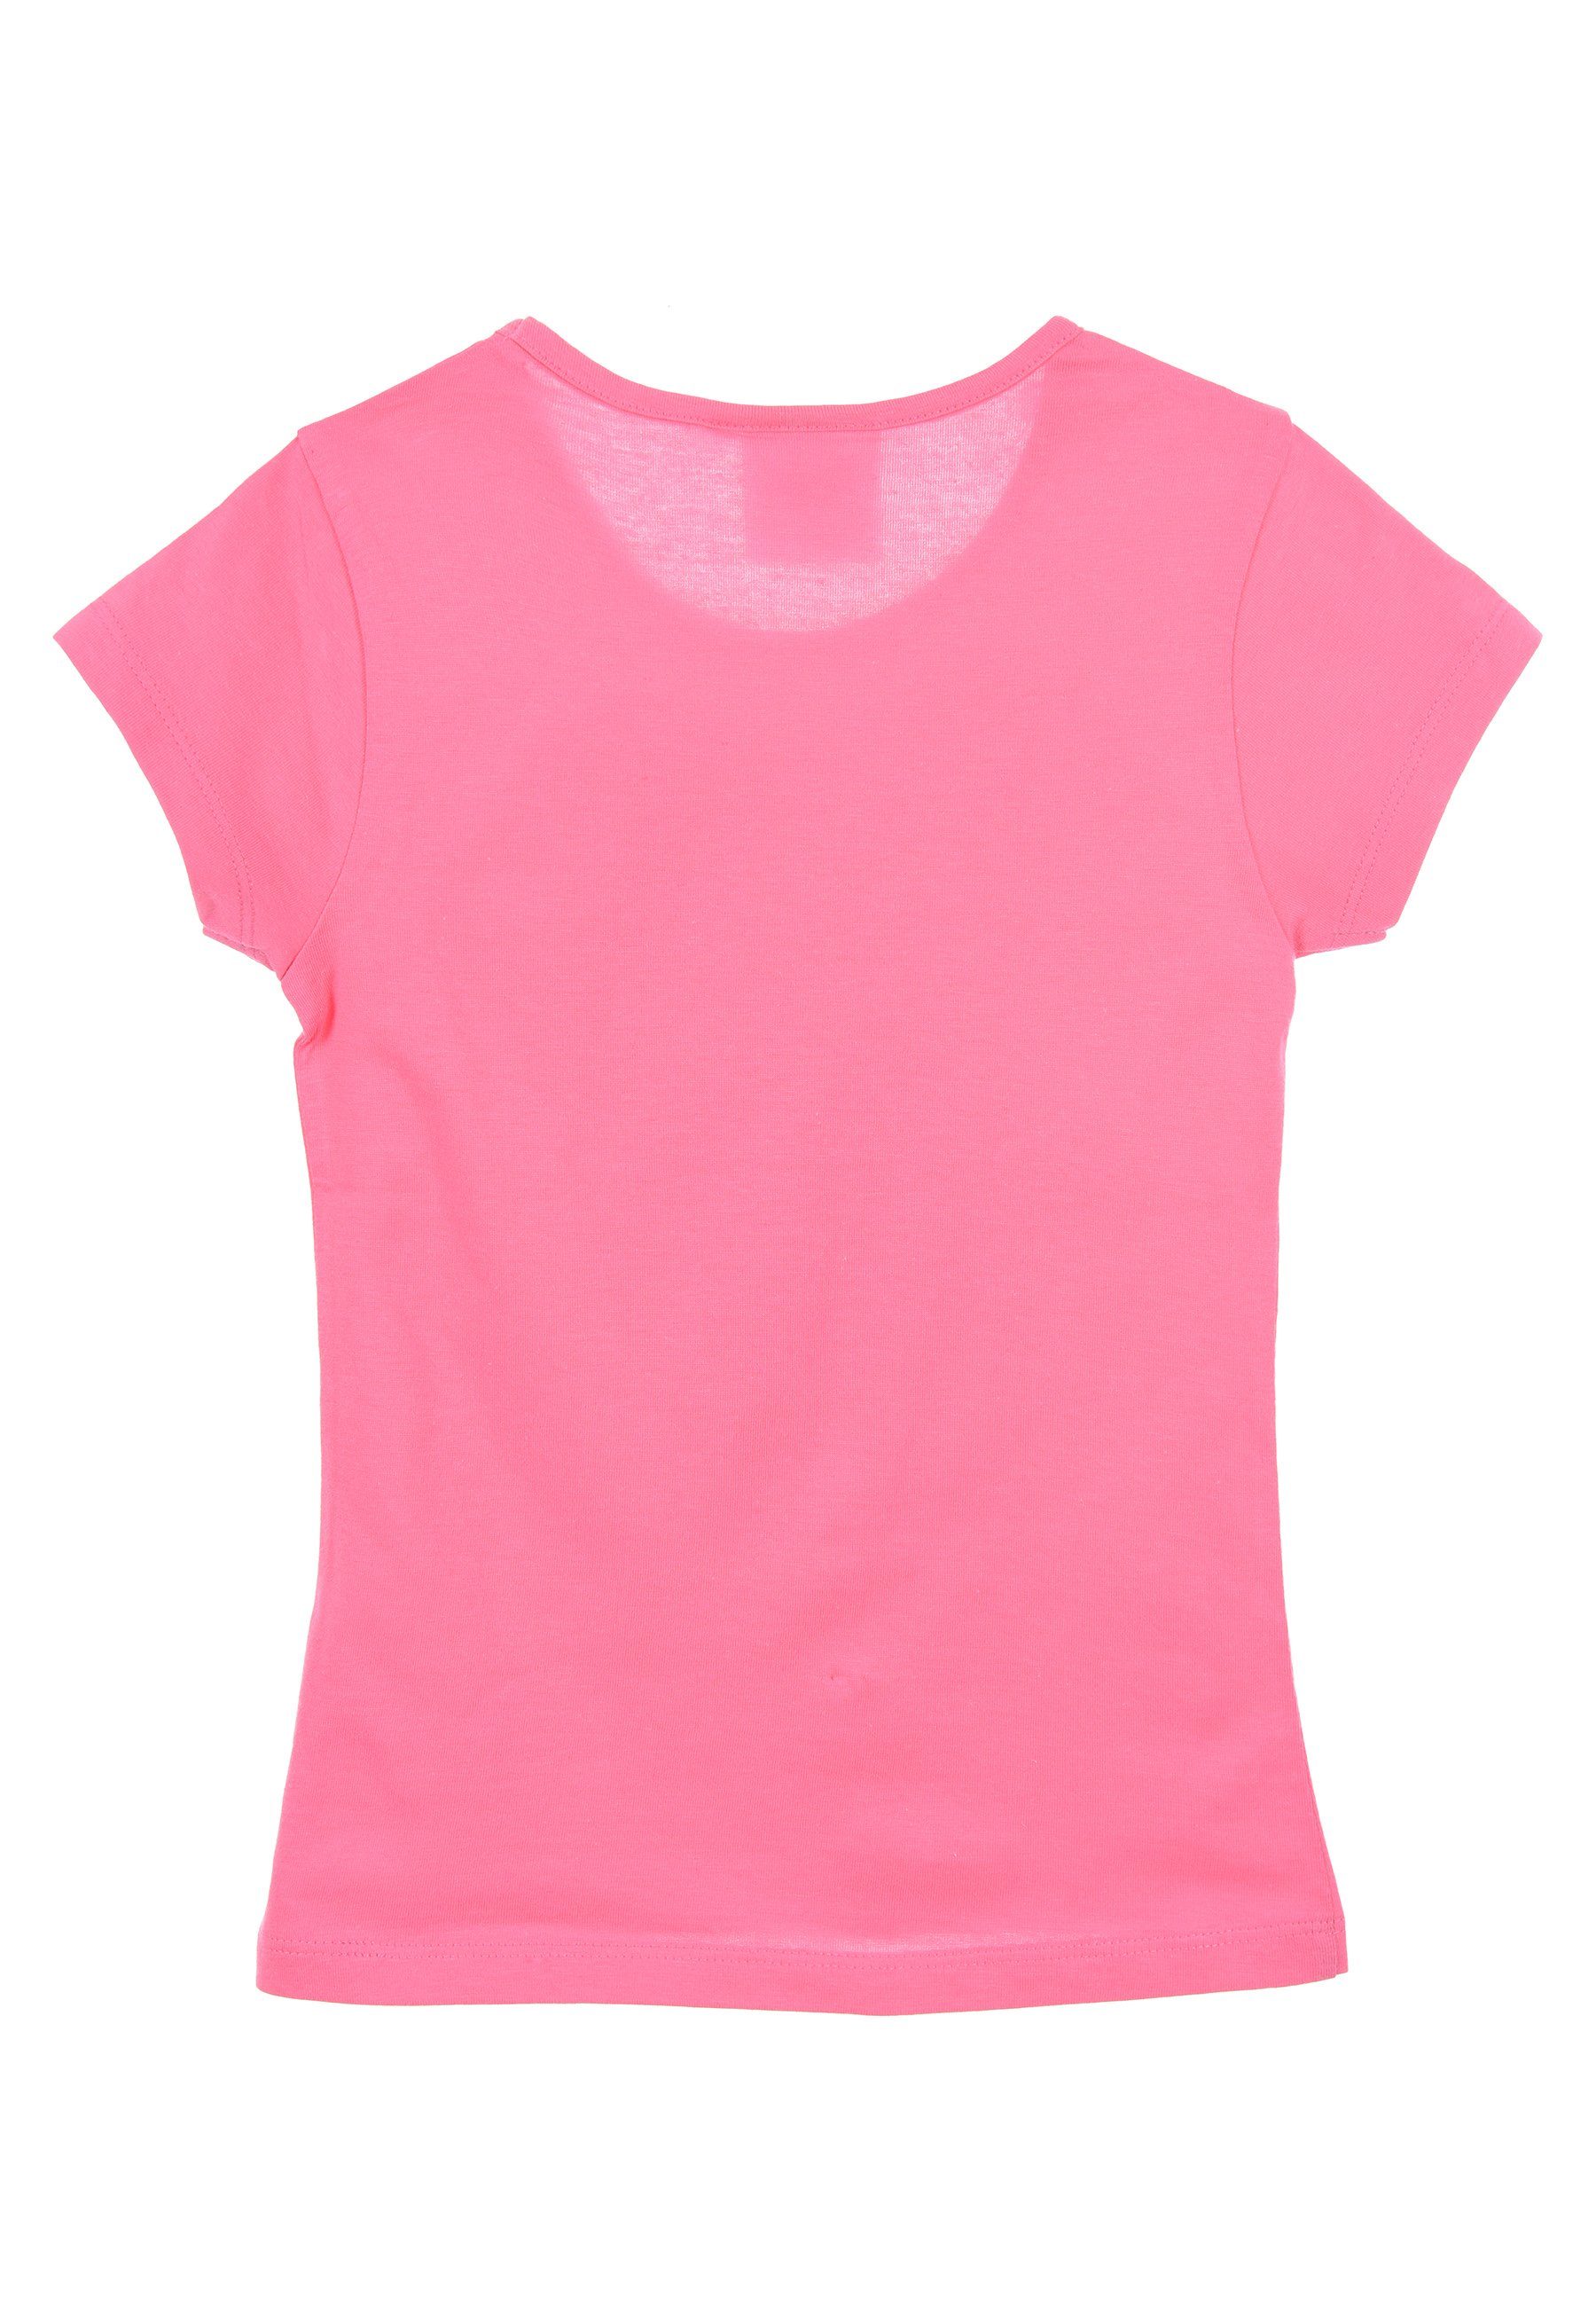 kurzarm T-Shirt Shirt Pink Mädchen PATROL Kinder PAW T-Shirt